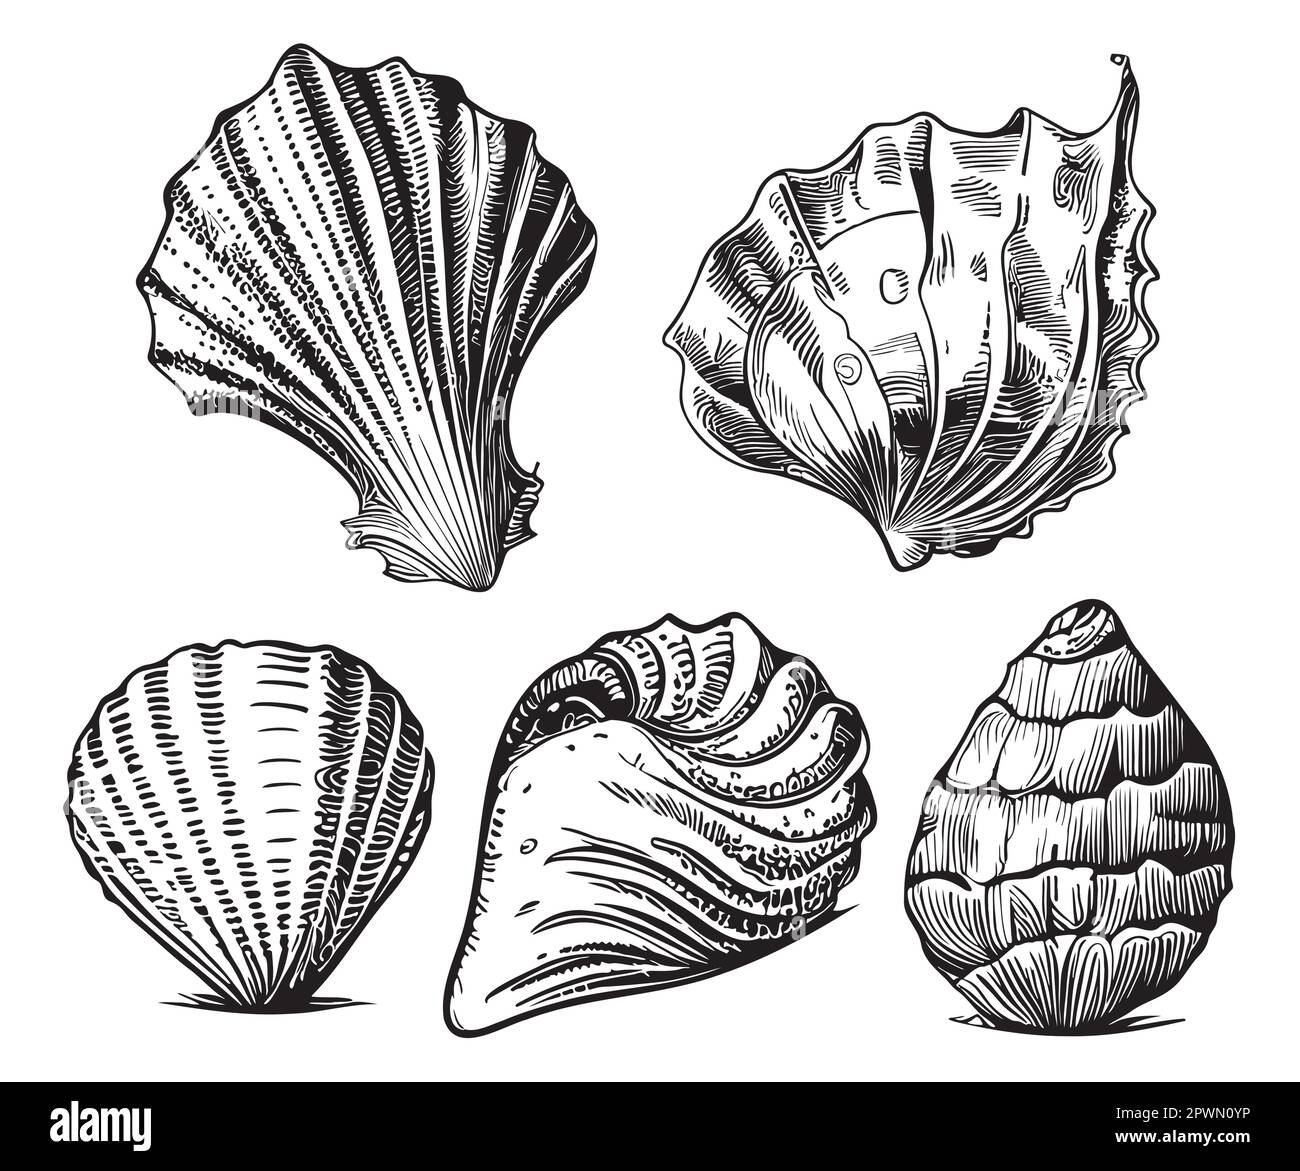 Seashell collection hand drawn sketch illustration Sea animals